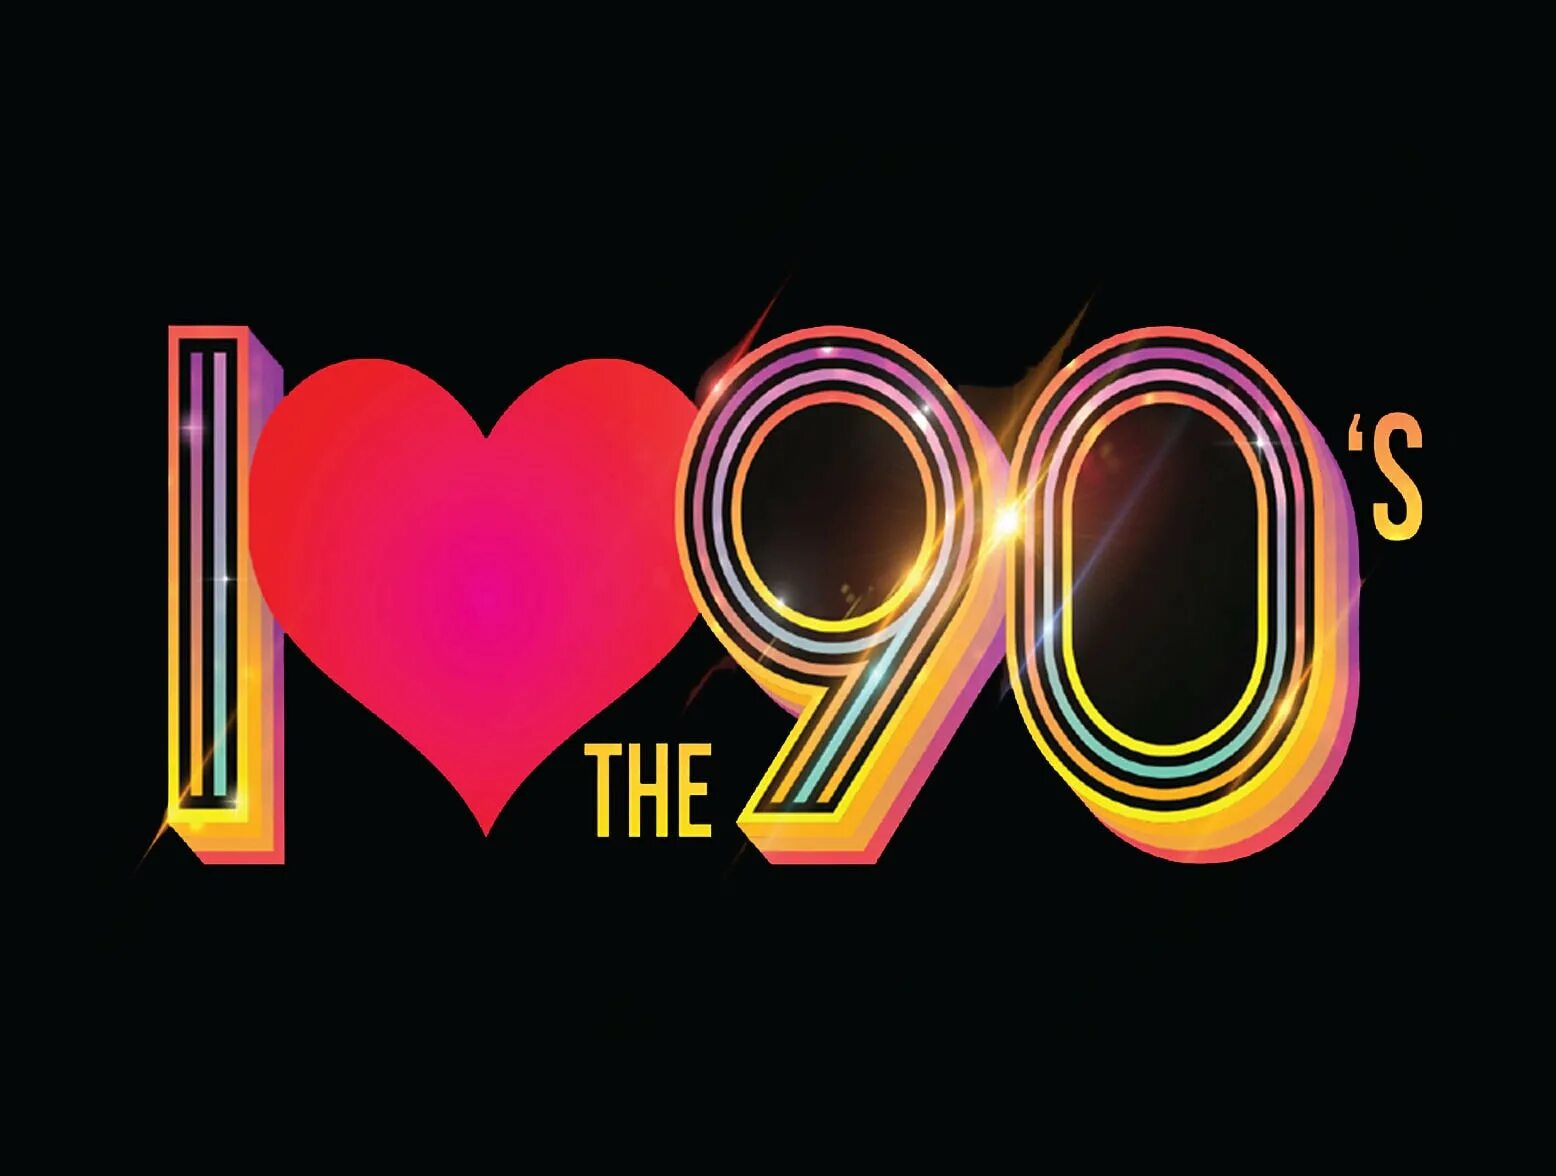 Вечеринка 90-х. I Love 90's. Логотипы 90х. Фон в стиле 90-х. Лове 90